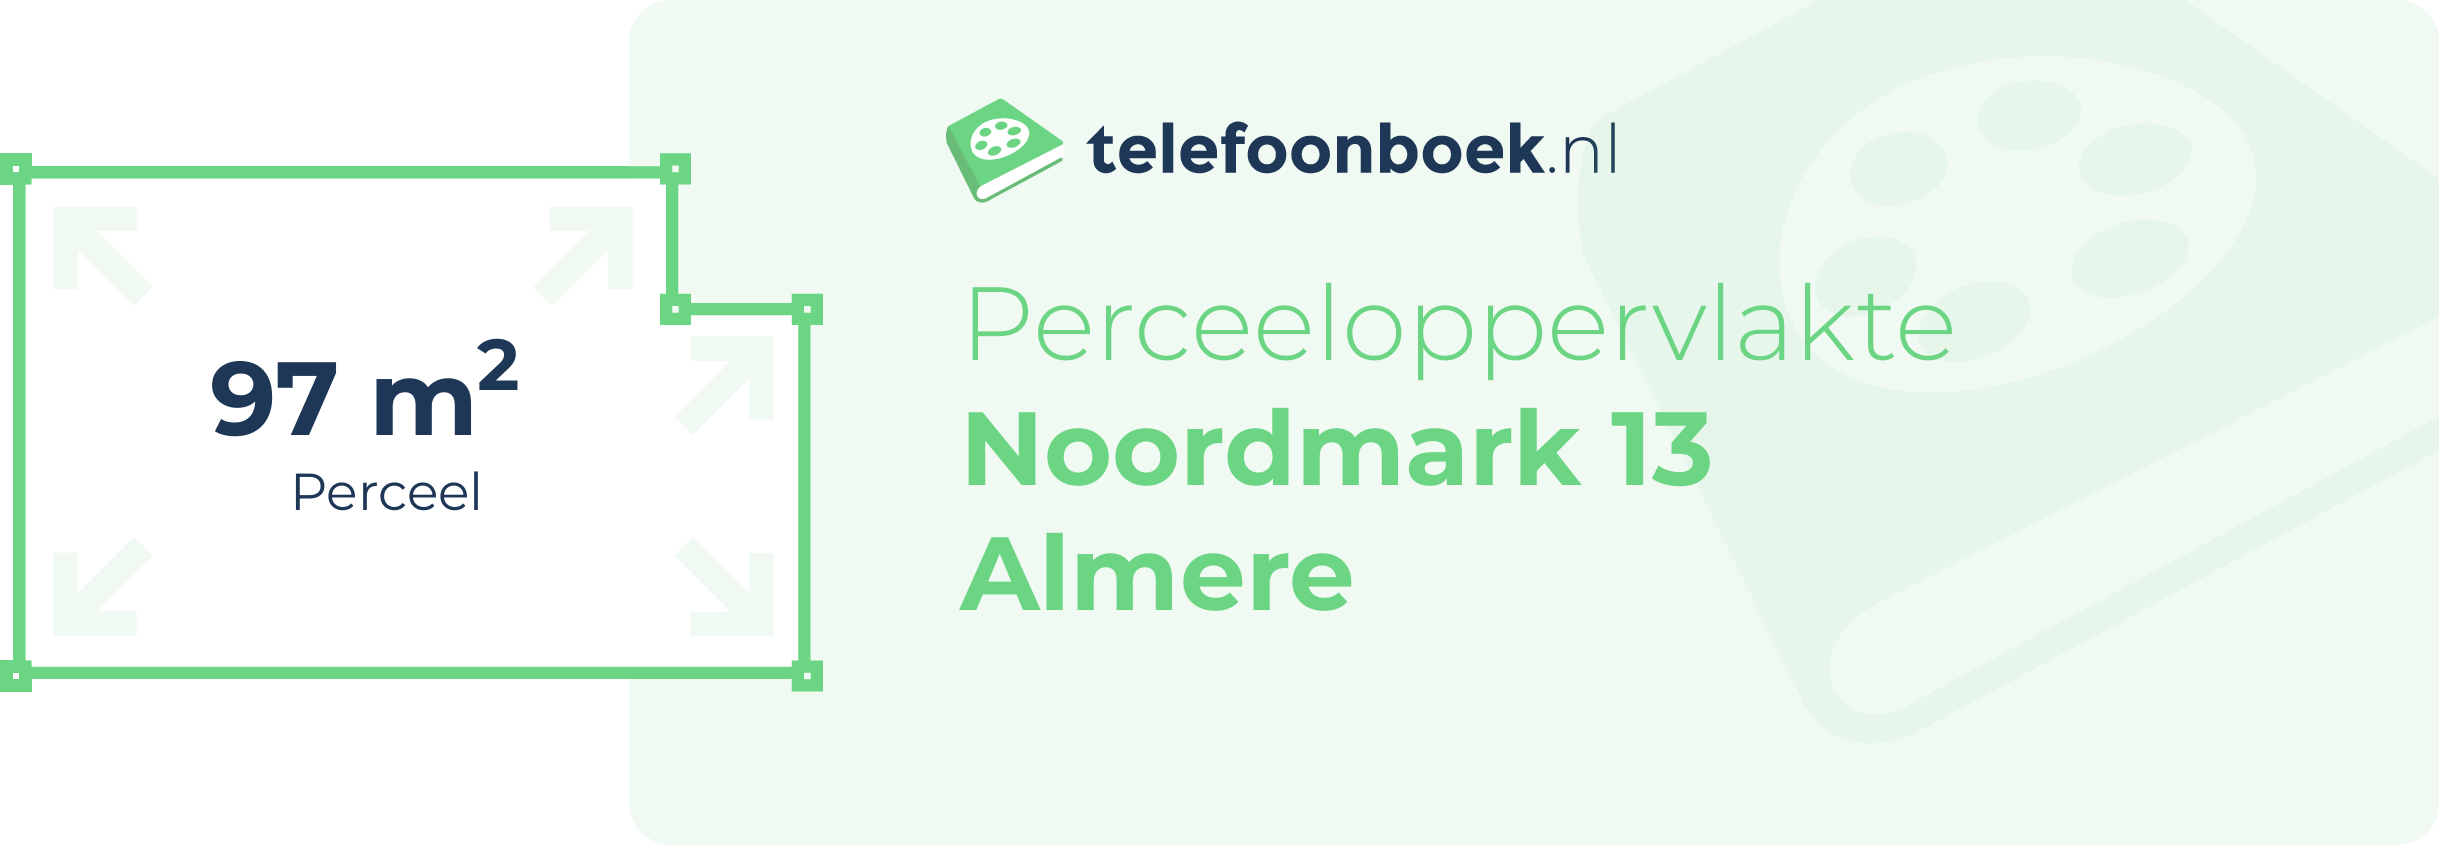 Perceeloppervlakte Noordmark 13 Almere